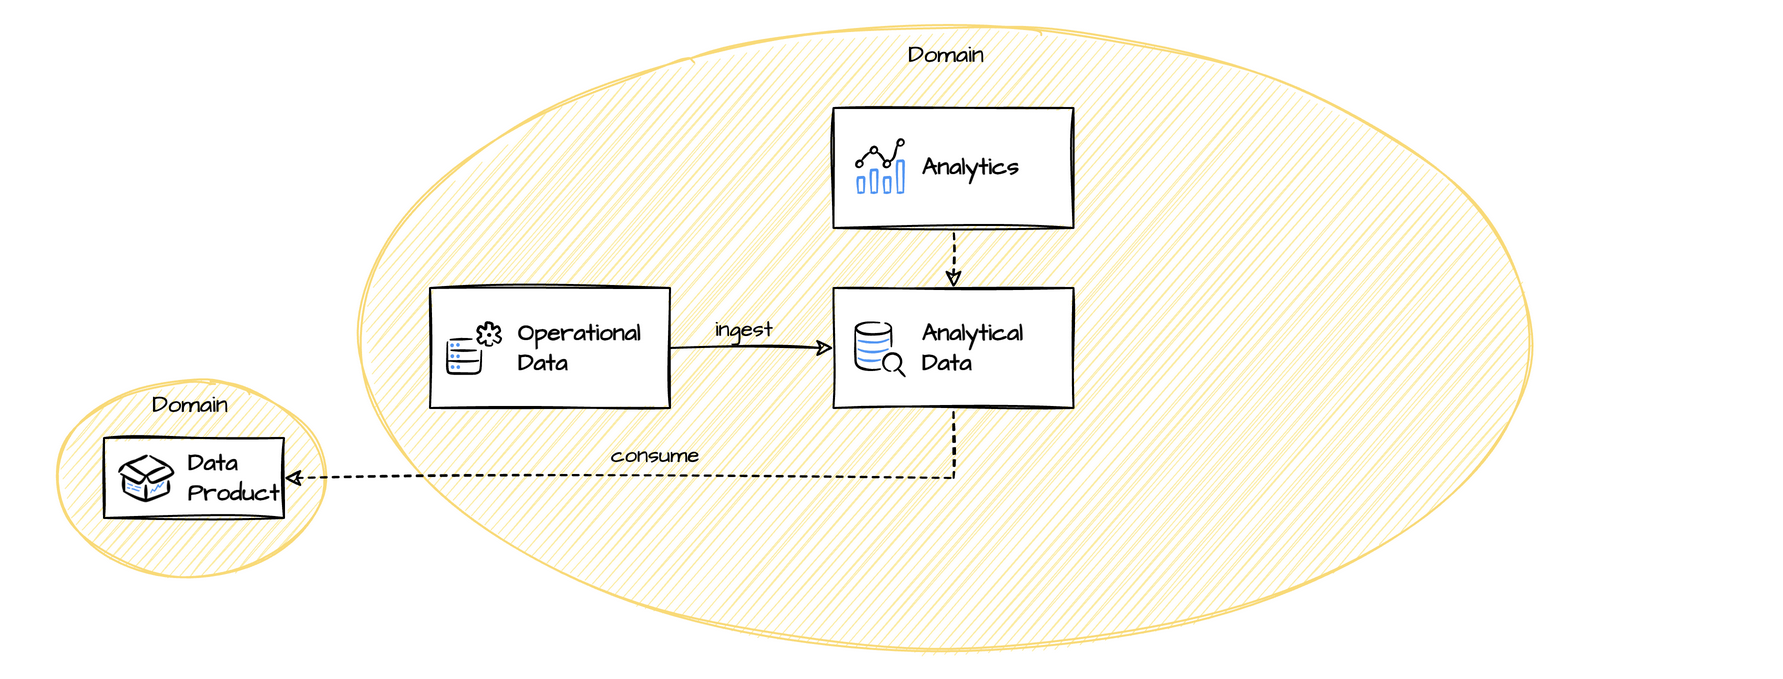 Level 3: Analyze Cross-domain Data